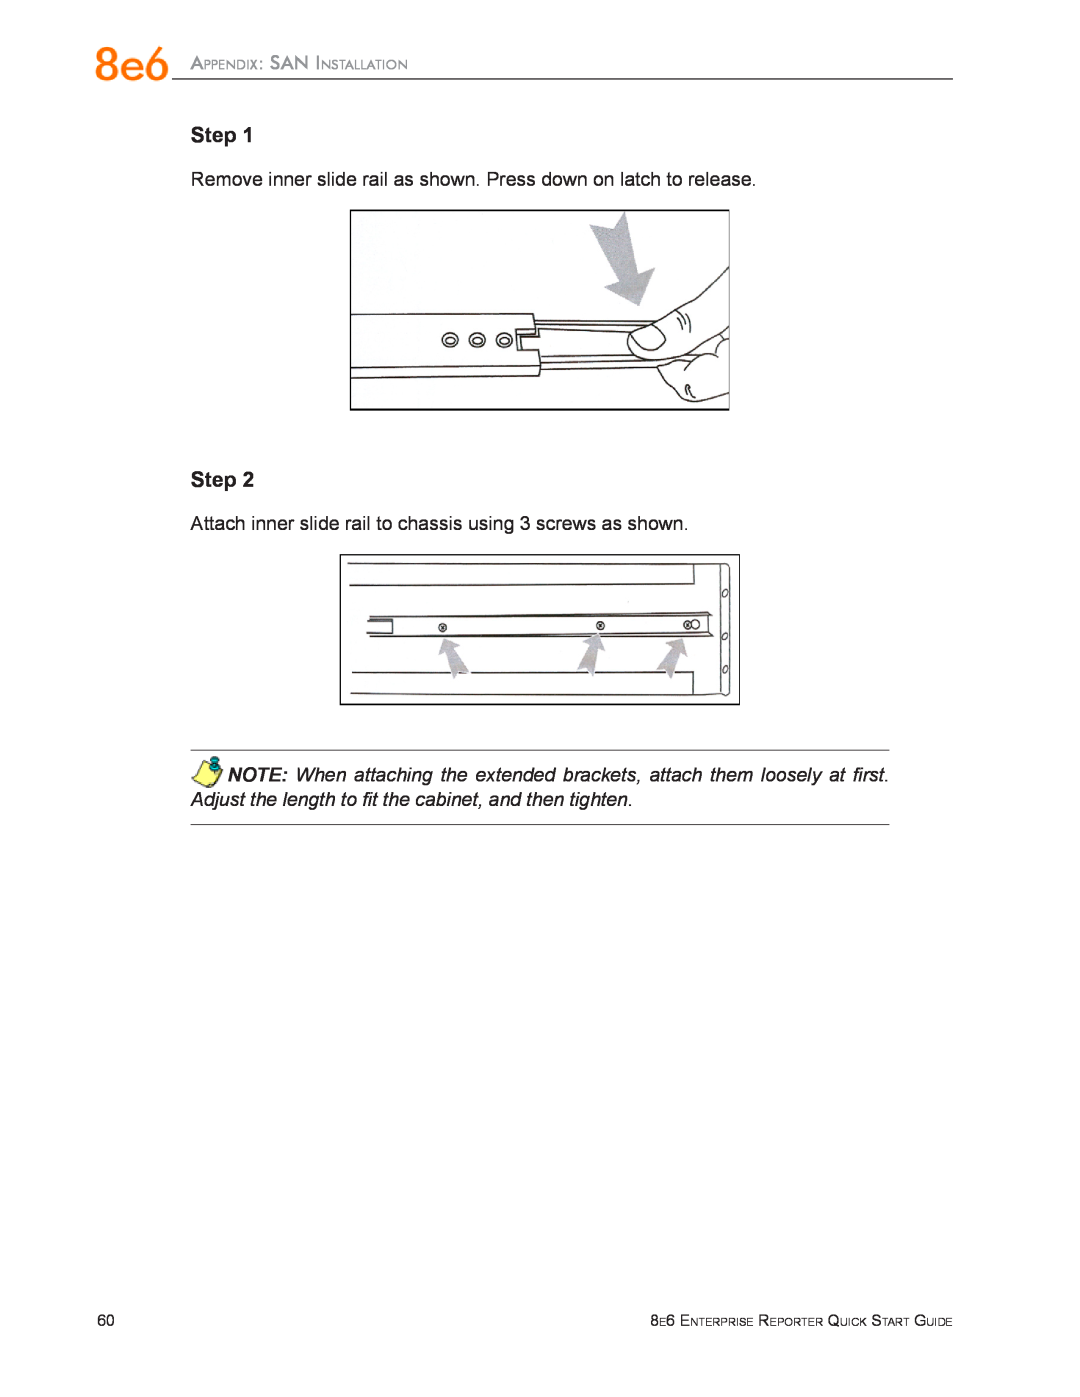 8e6 Technologies ERH-200 (5K02-24) quick start Step, Remove inner slide rail as shown. Press down on latch to release 